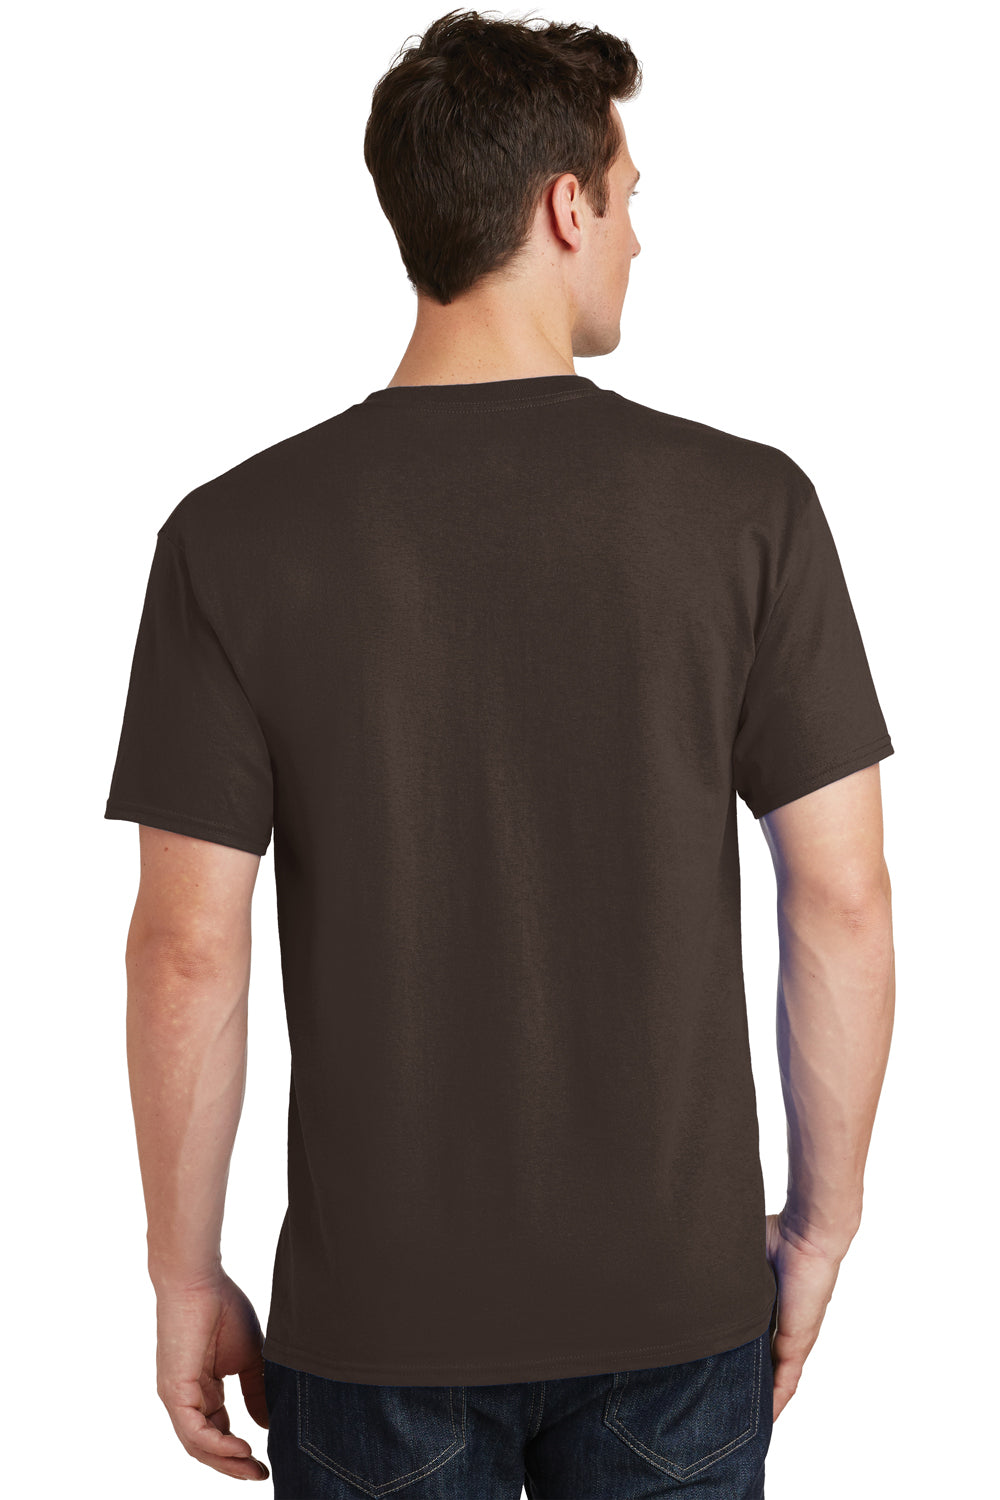 Port & Company PC54 Mens Core Short Sleeve Crewneck T-Shirt Chocolate Brown Back